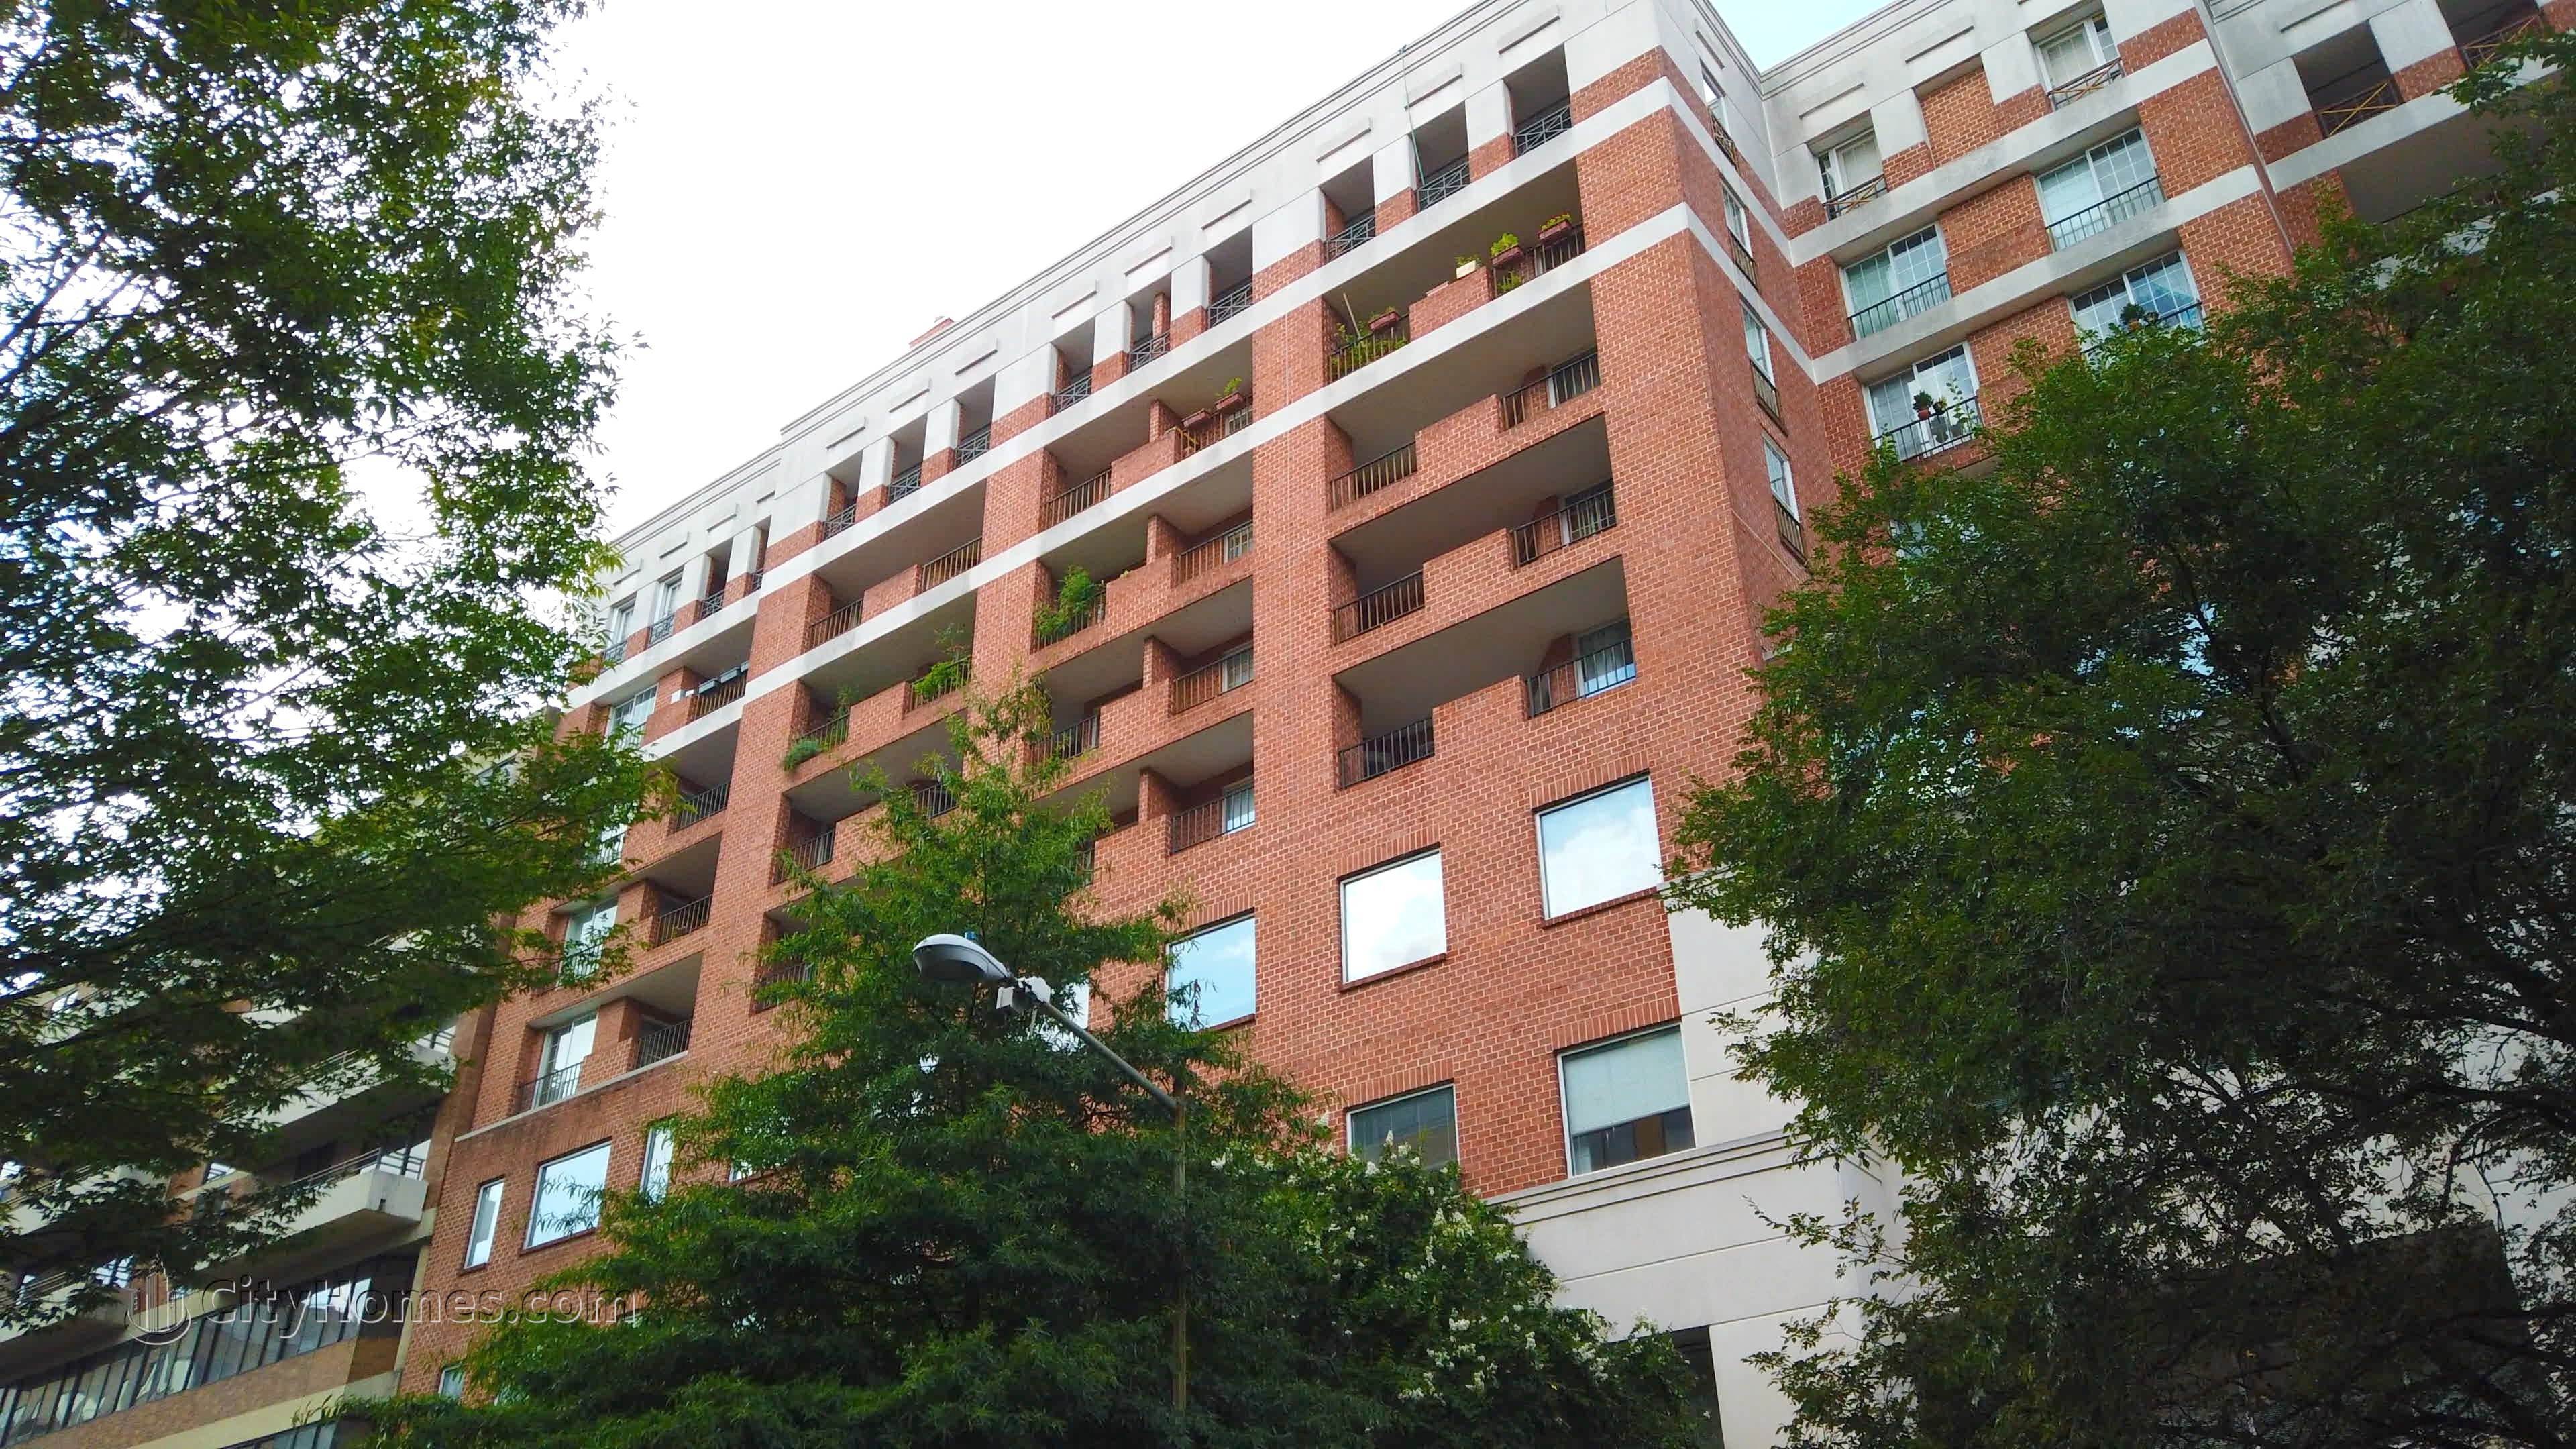 8. Metropolitan Condos gebouw op 1230 23rd St NW, West End, Washington, DC 20037